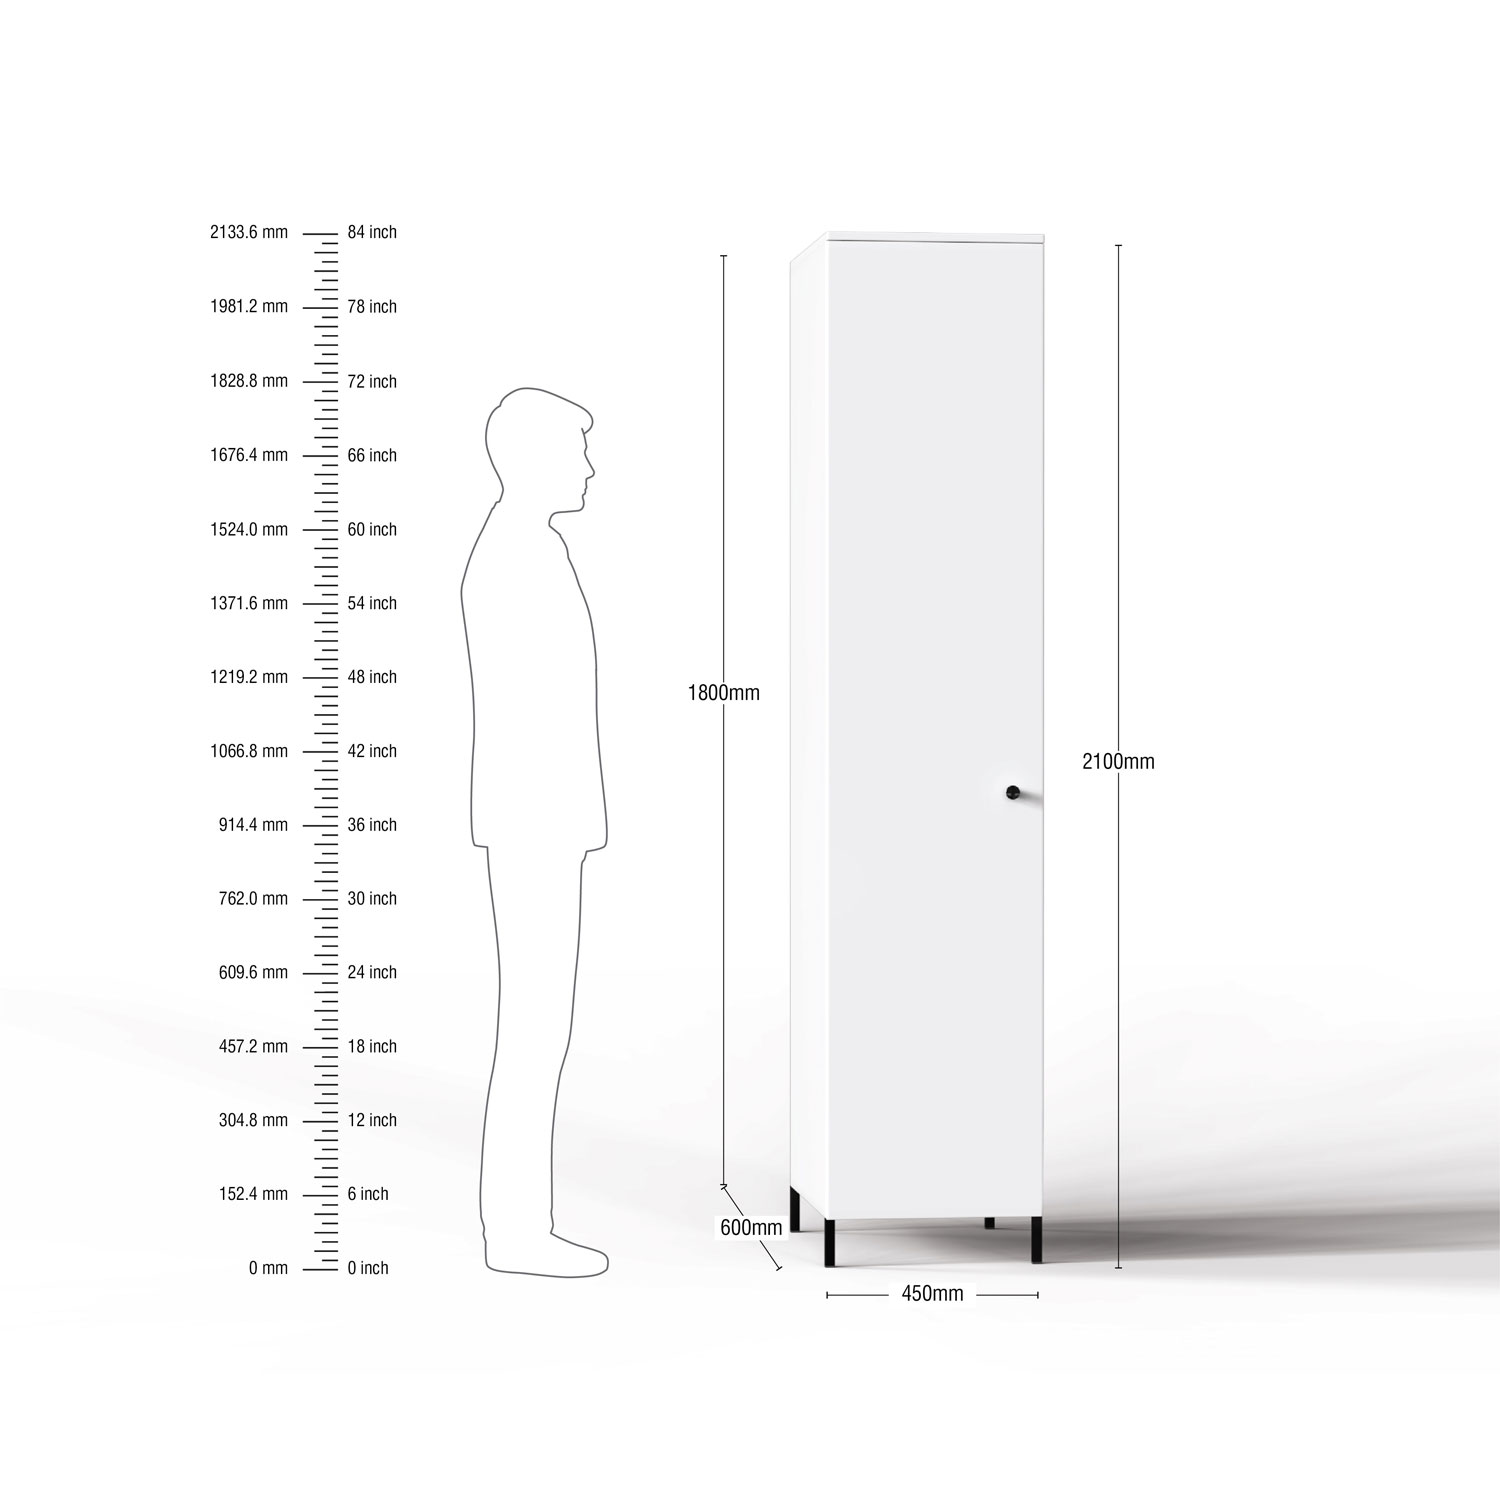 Lambent 1 Door Wardrobe in White and Pairie Green Finish – SWRD001 C83